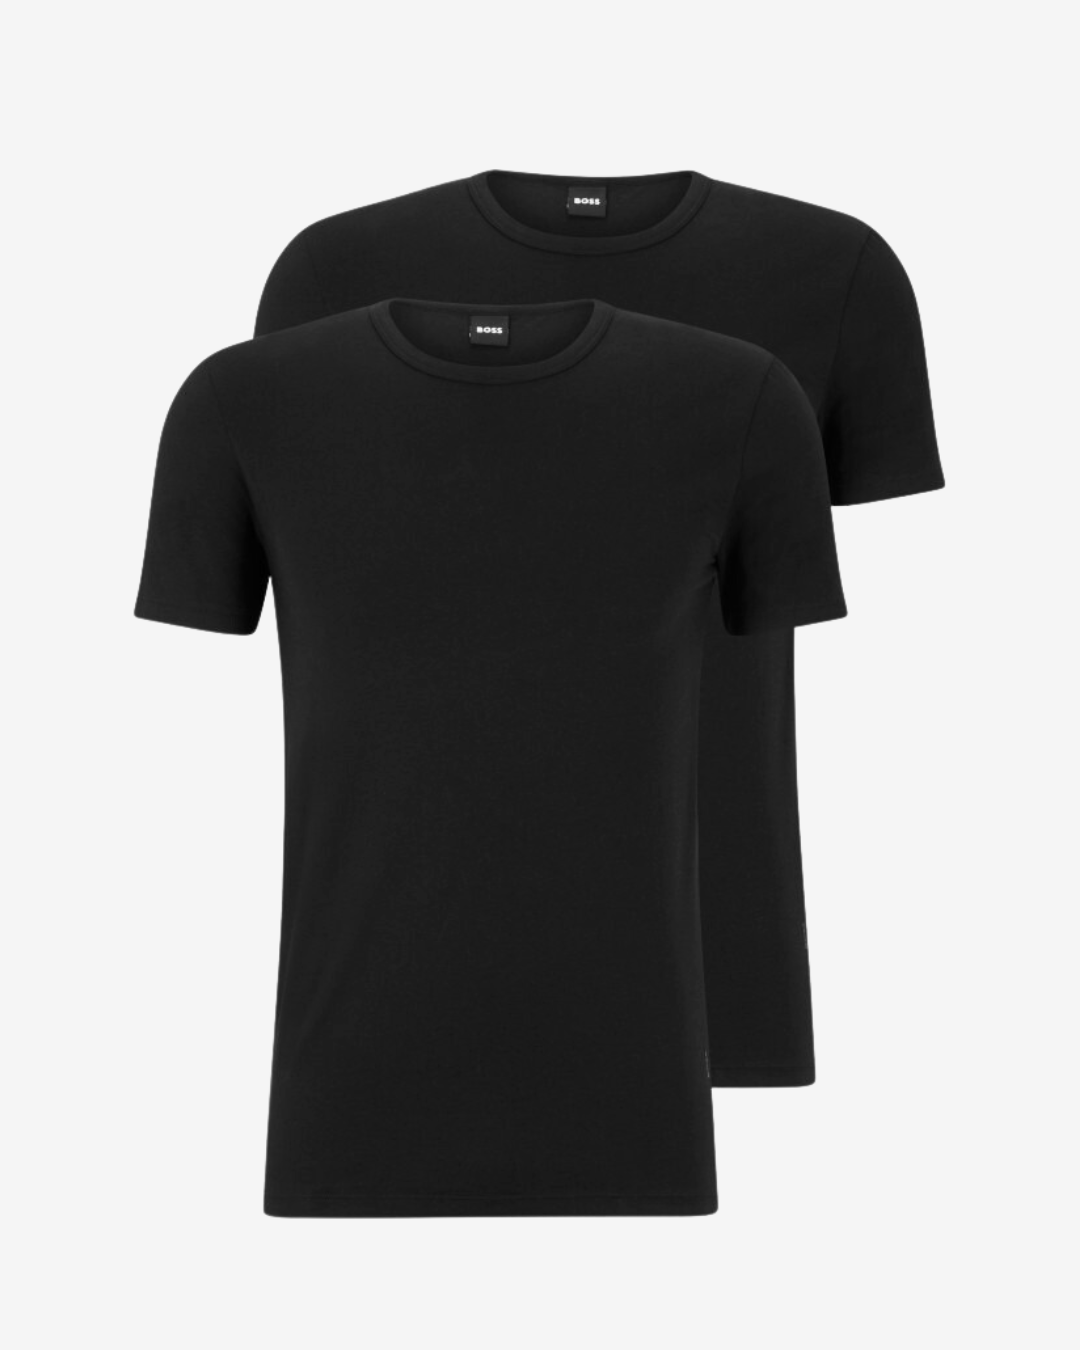 Se Hugo Boss Rundhals slim t-shirt 2-pak - Sort - Str. XL - Modish.dk hos Modish.dk